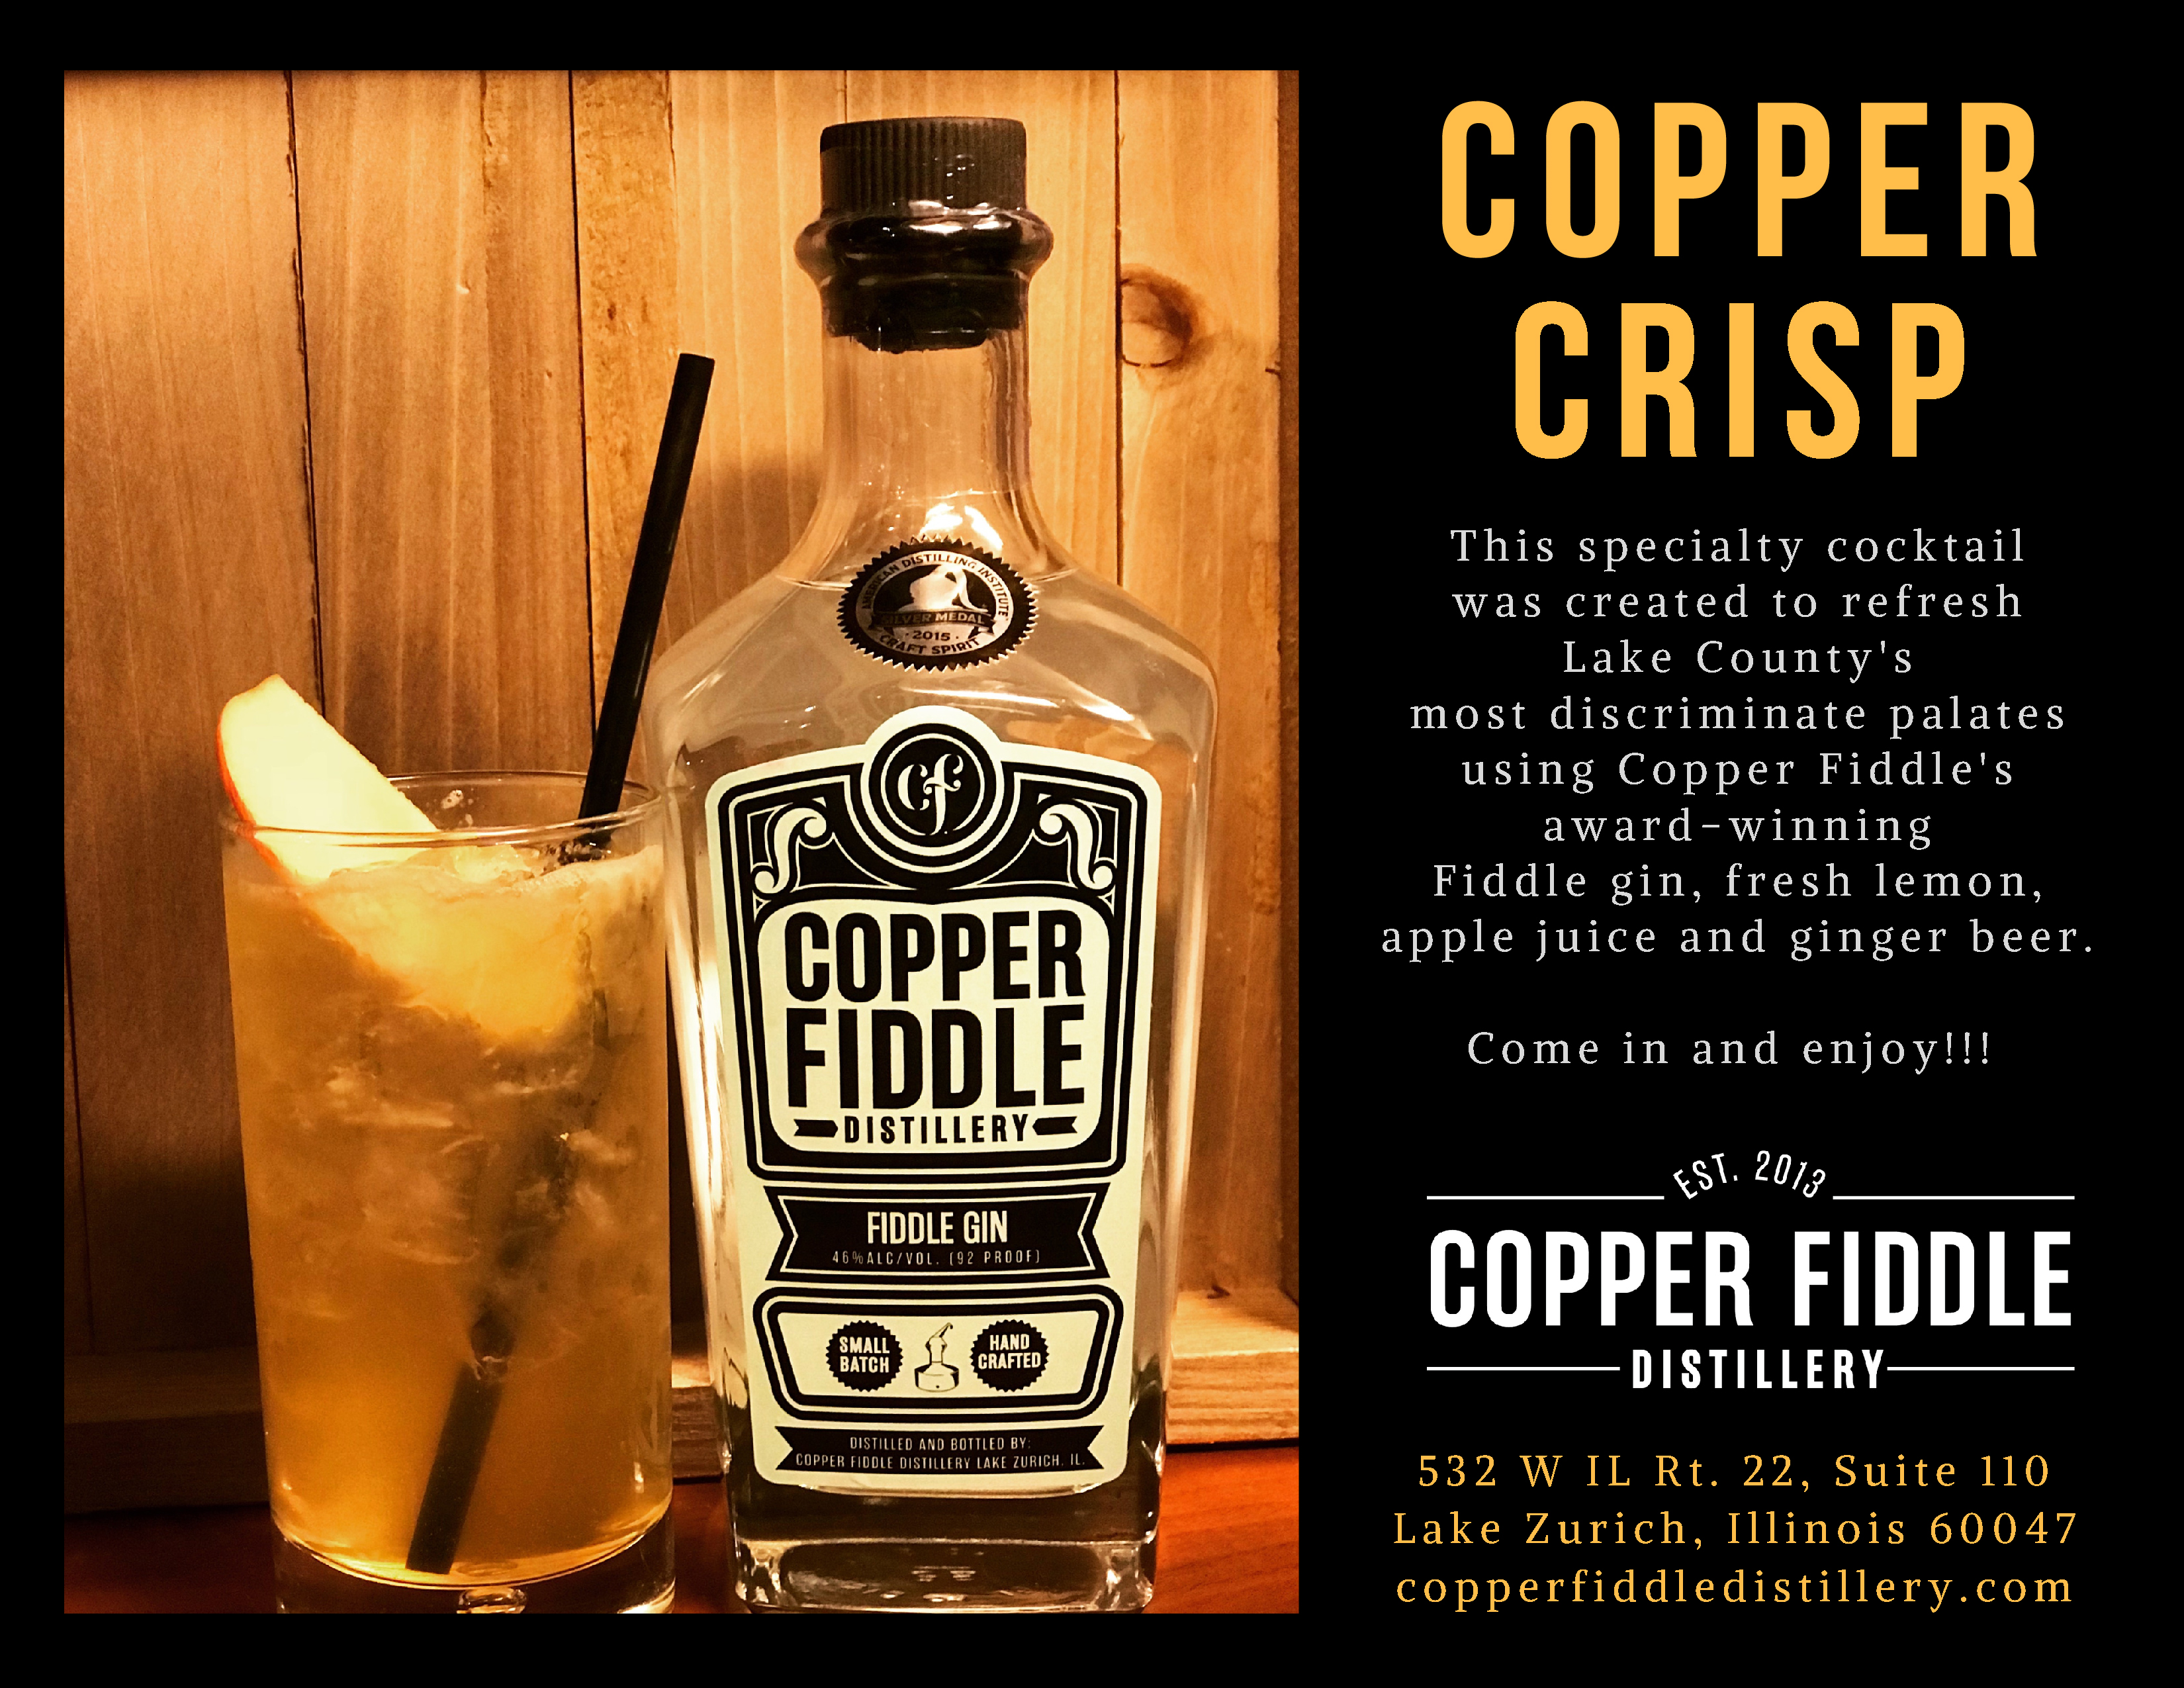 Copper Fiddle Distillery